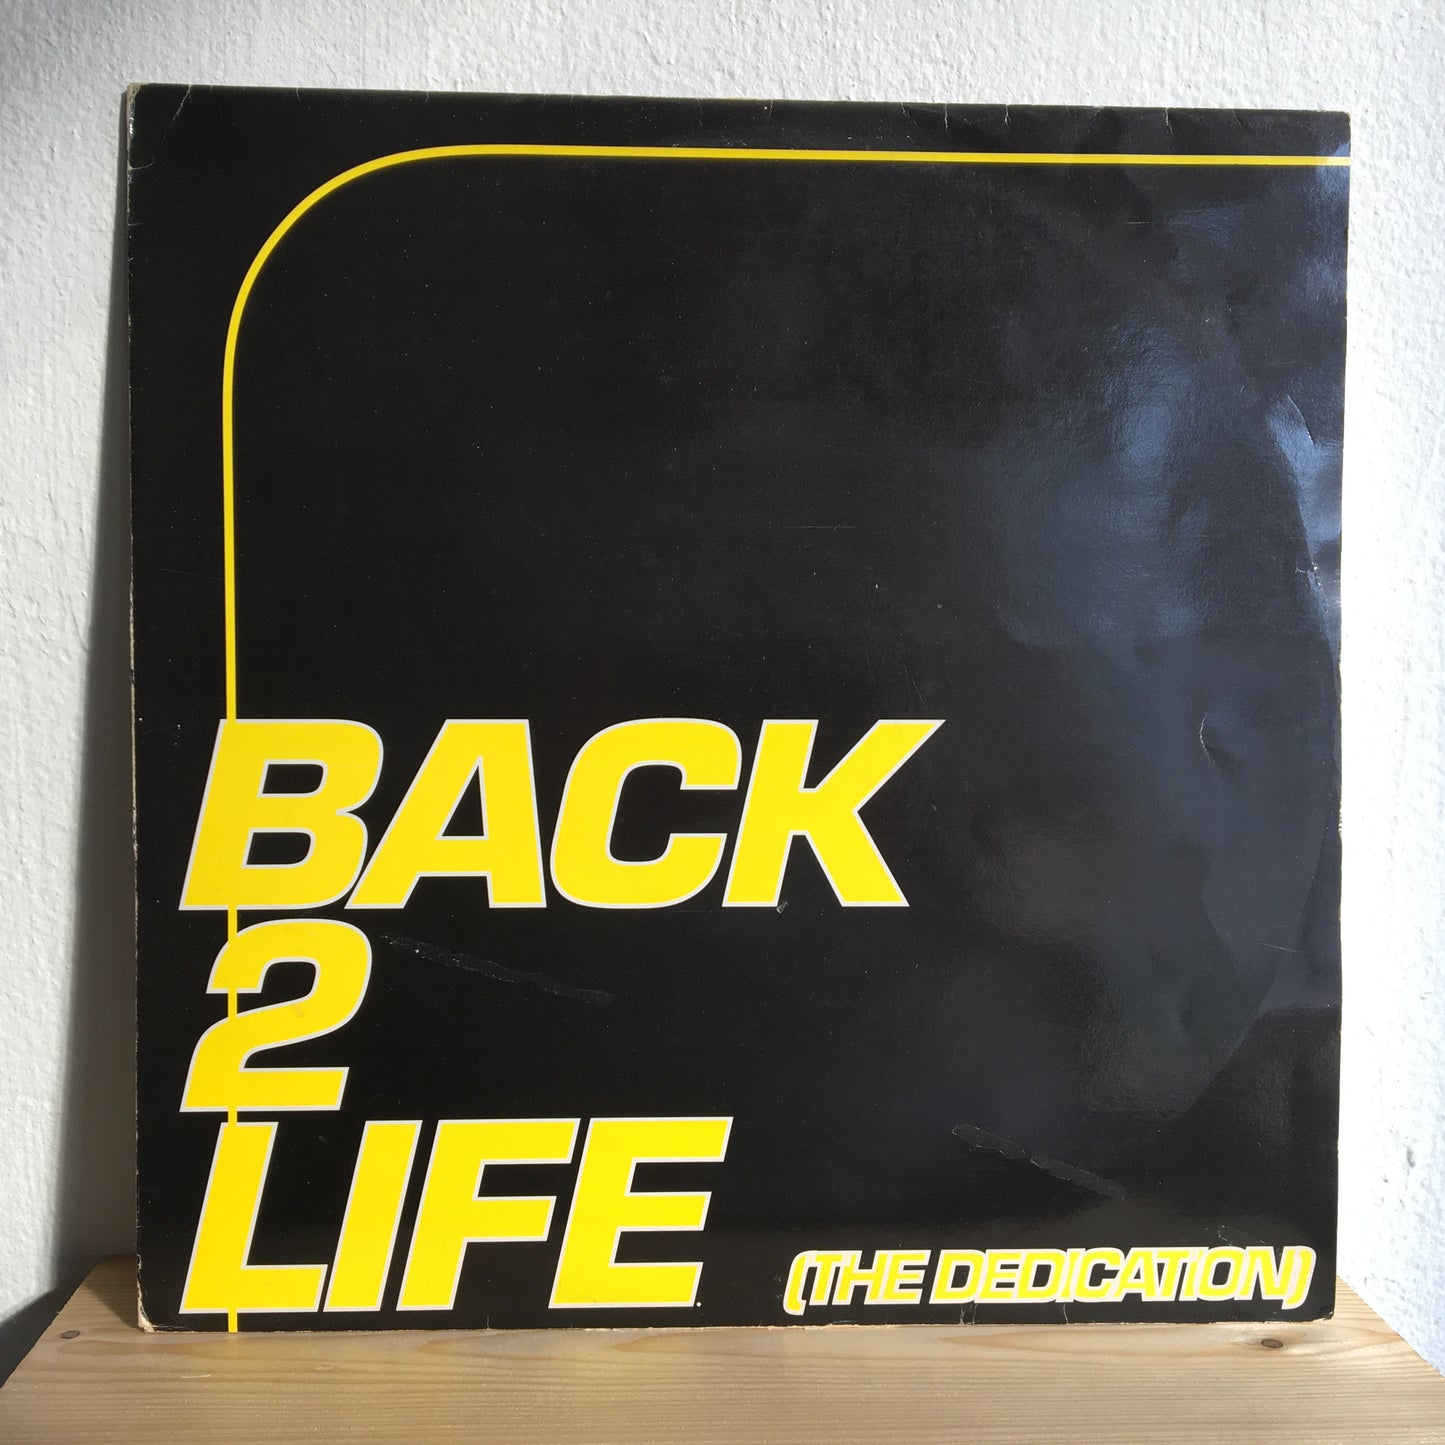 The J.B. – Back 2 Life (The Dedication)